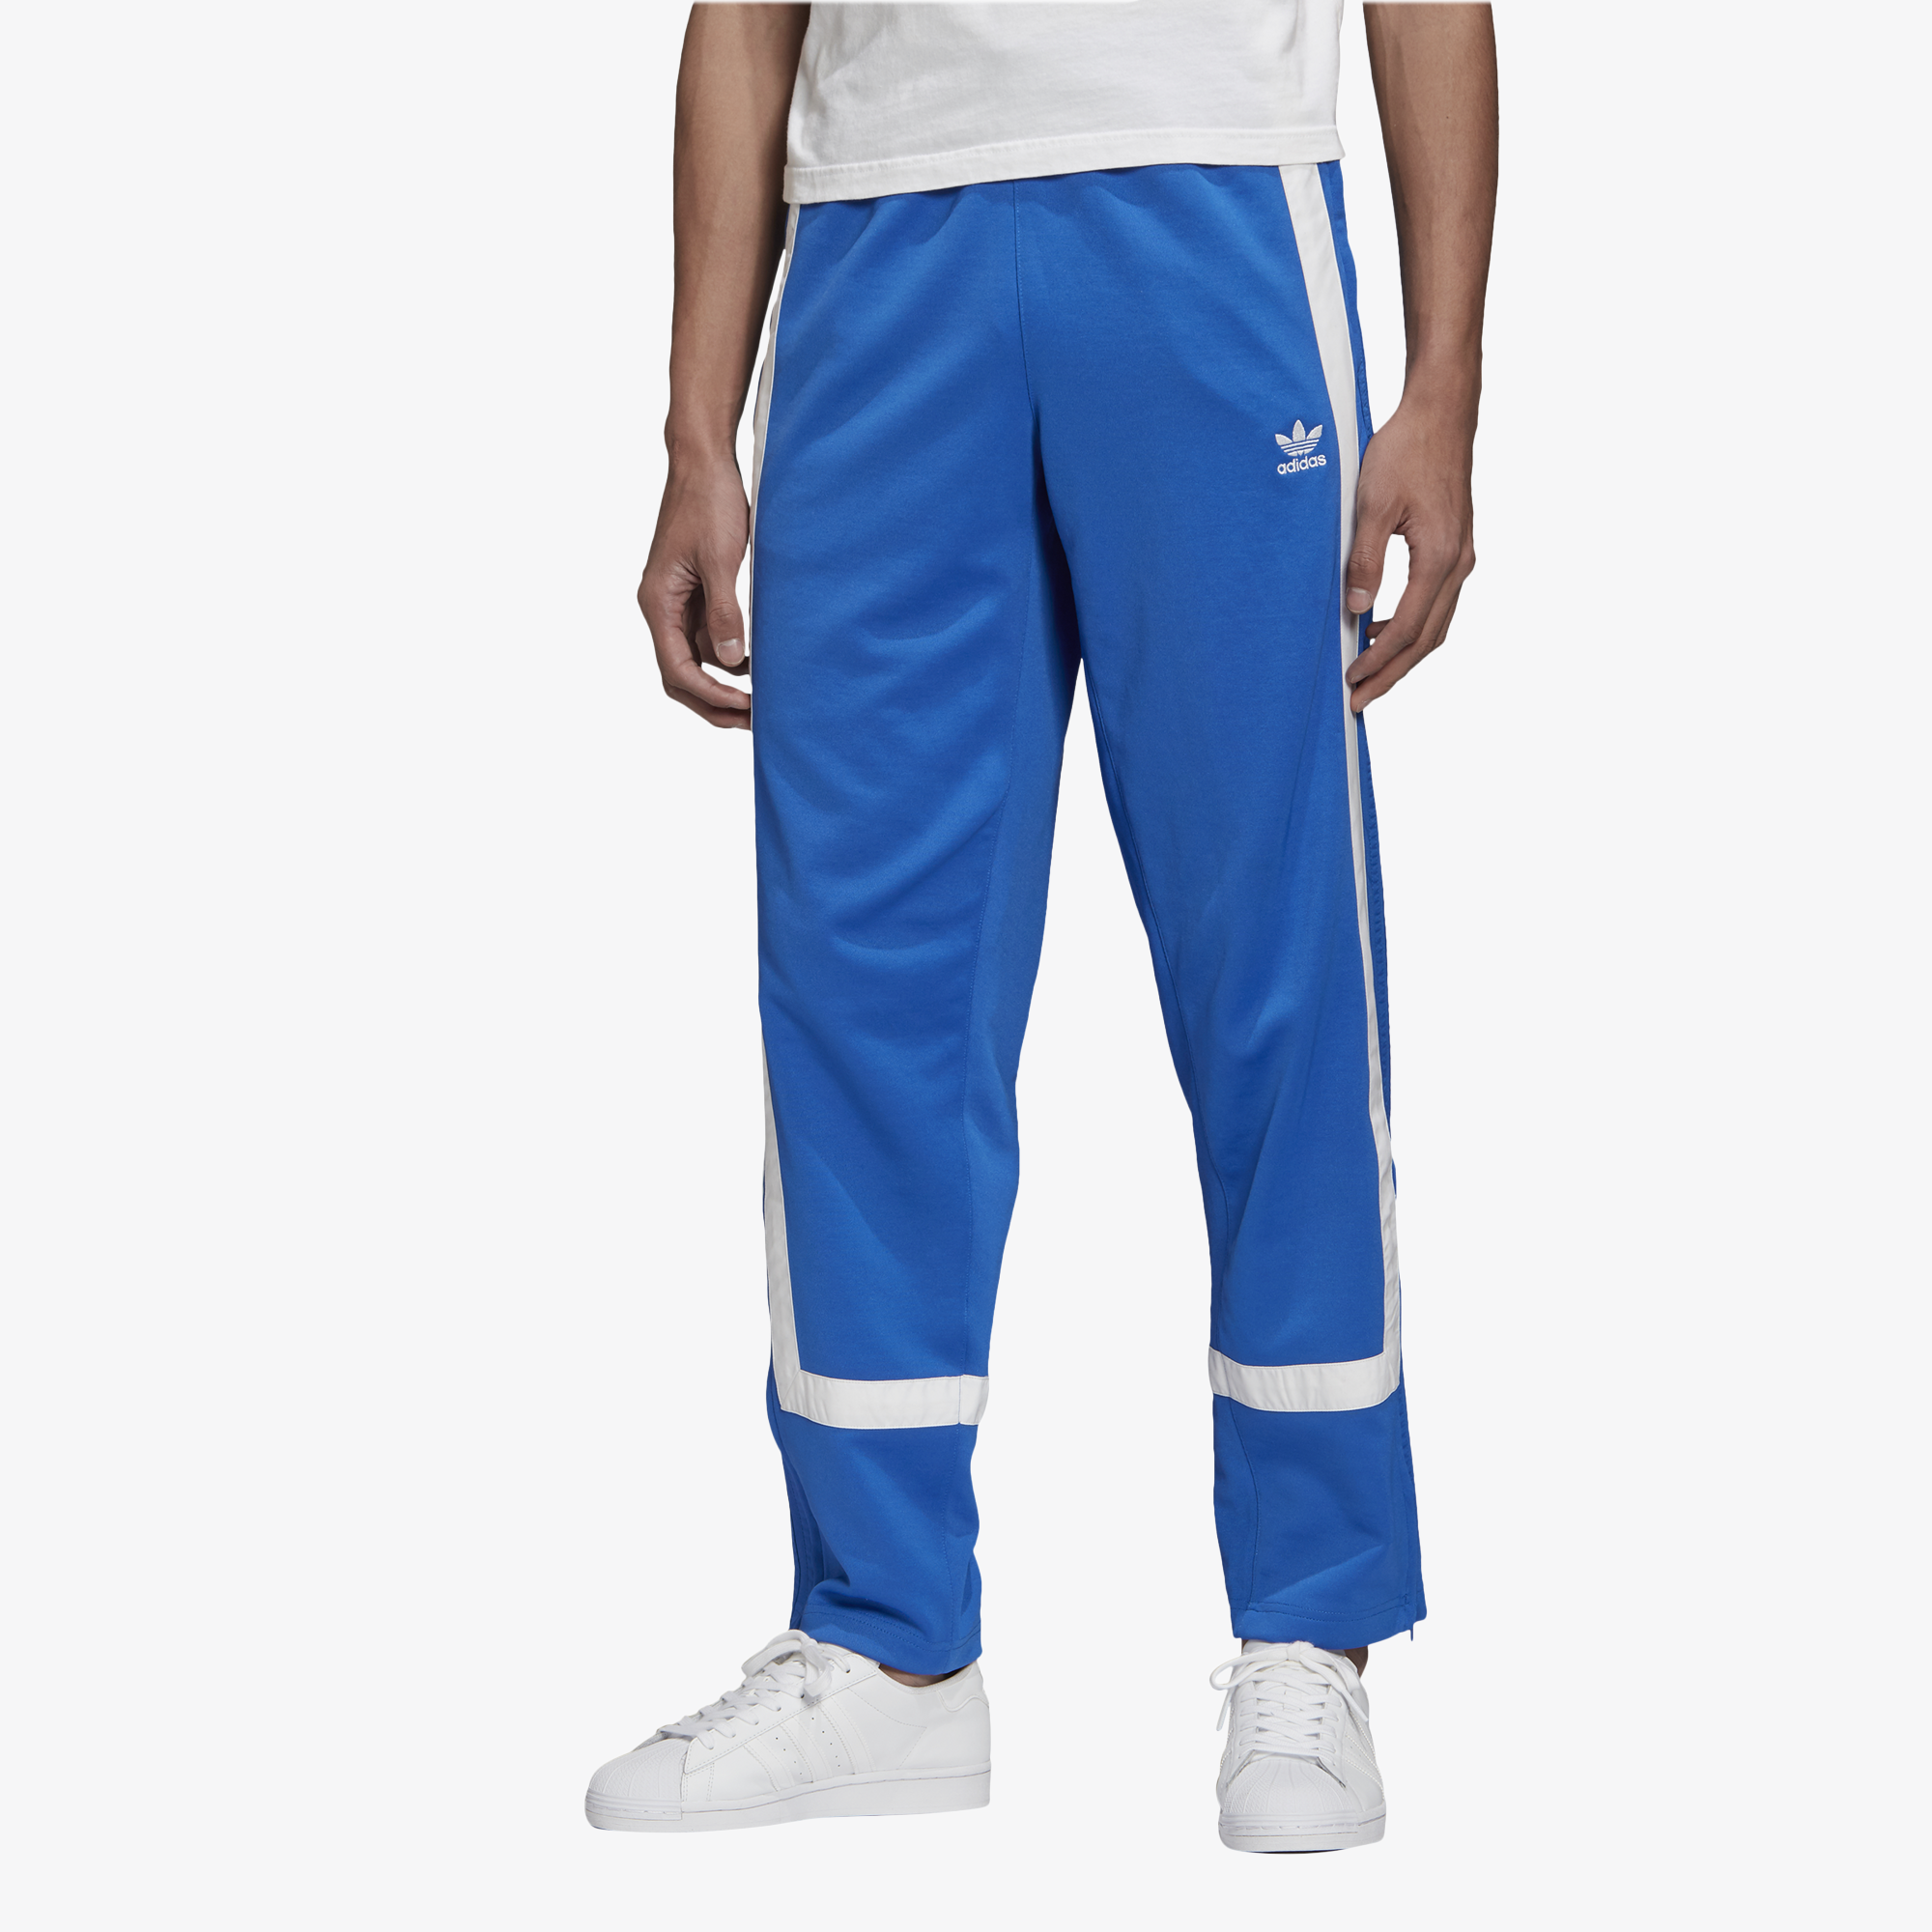 blue adidas pants men